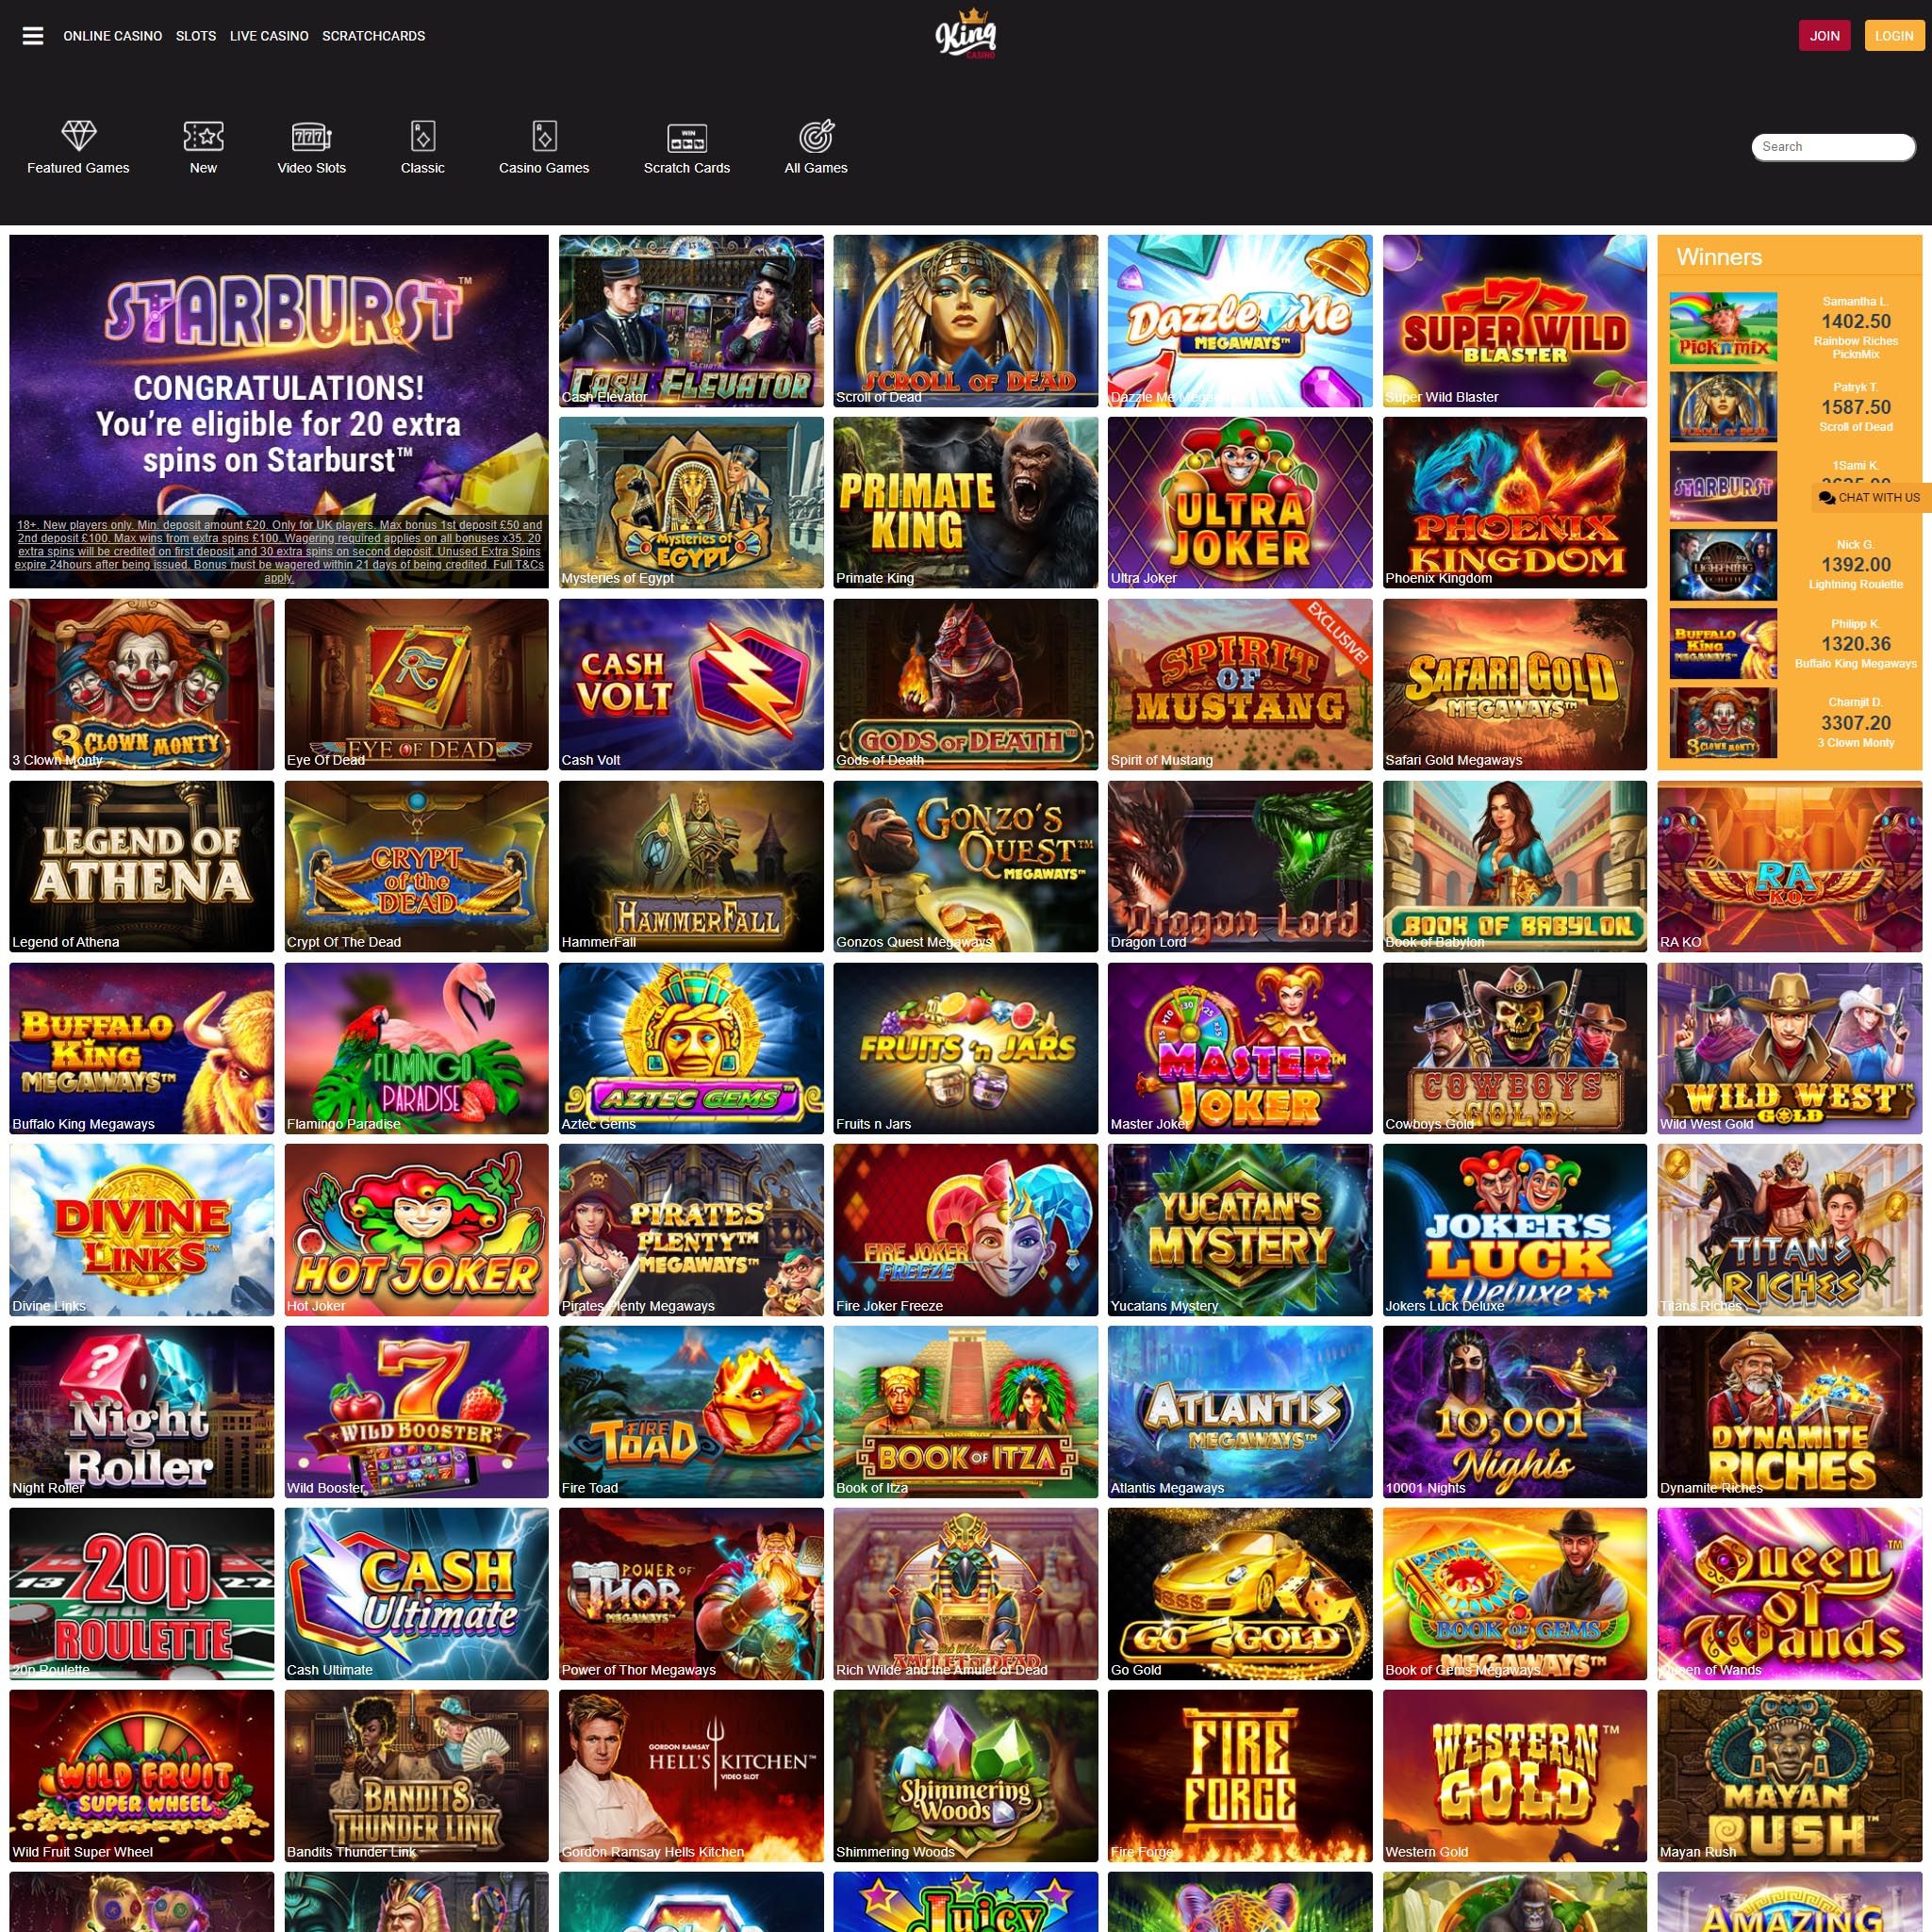 King Casino full games catalogue